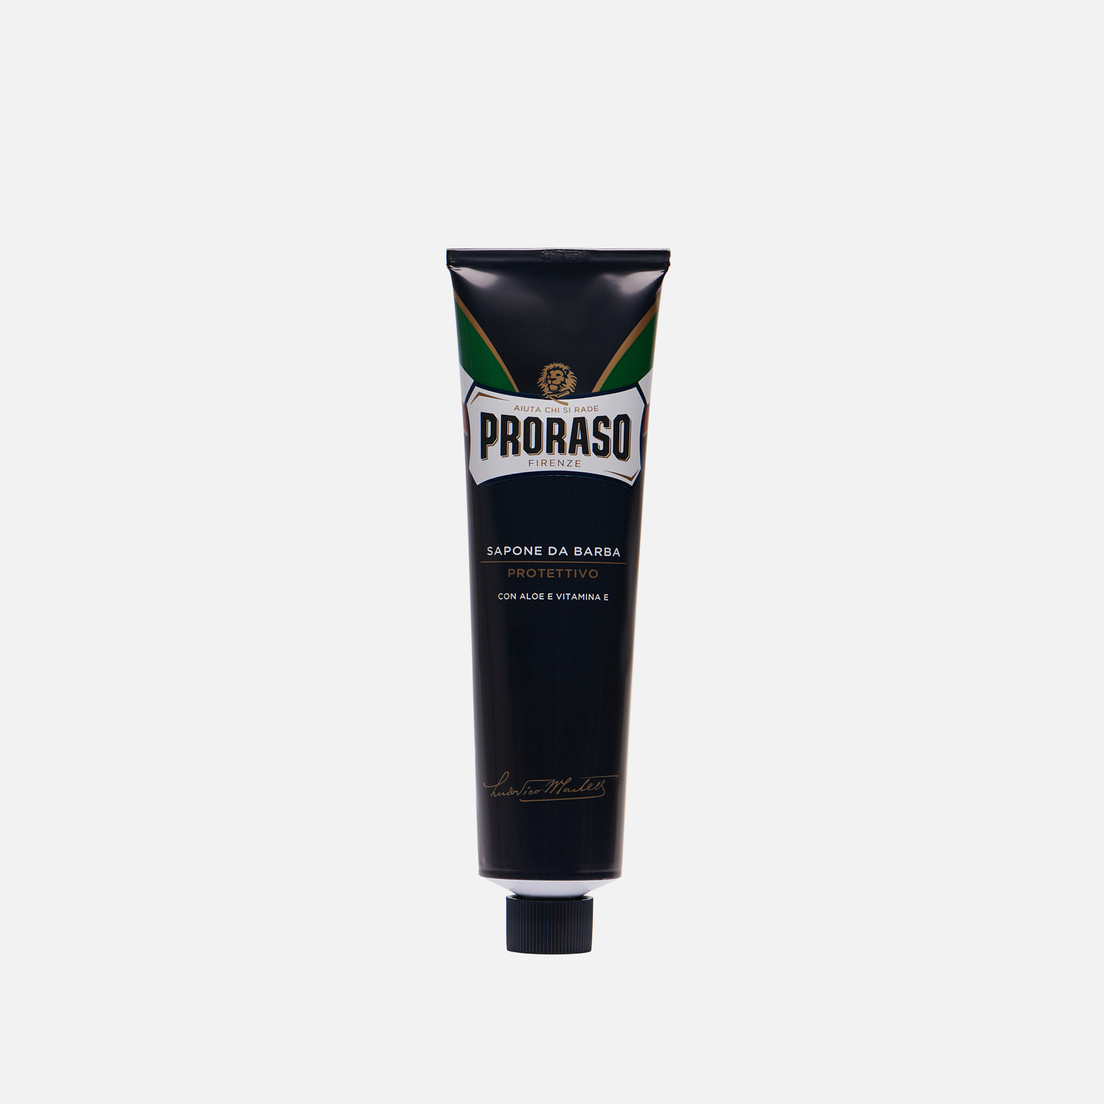 Proraso Крем для бритья Shaving Protective Aloe Vera/Vitamin E